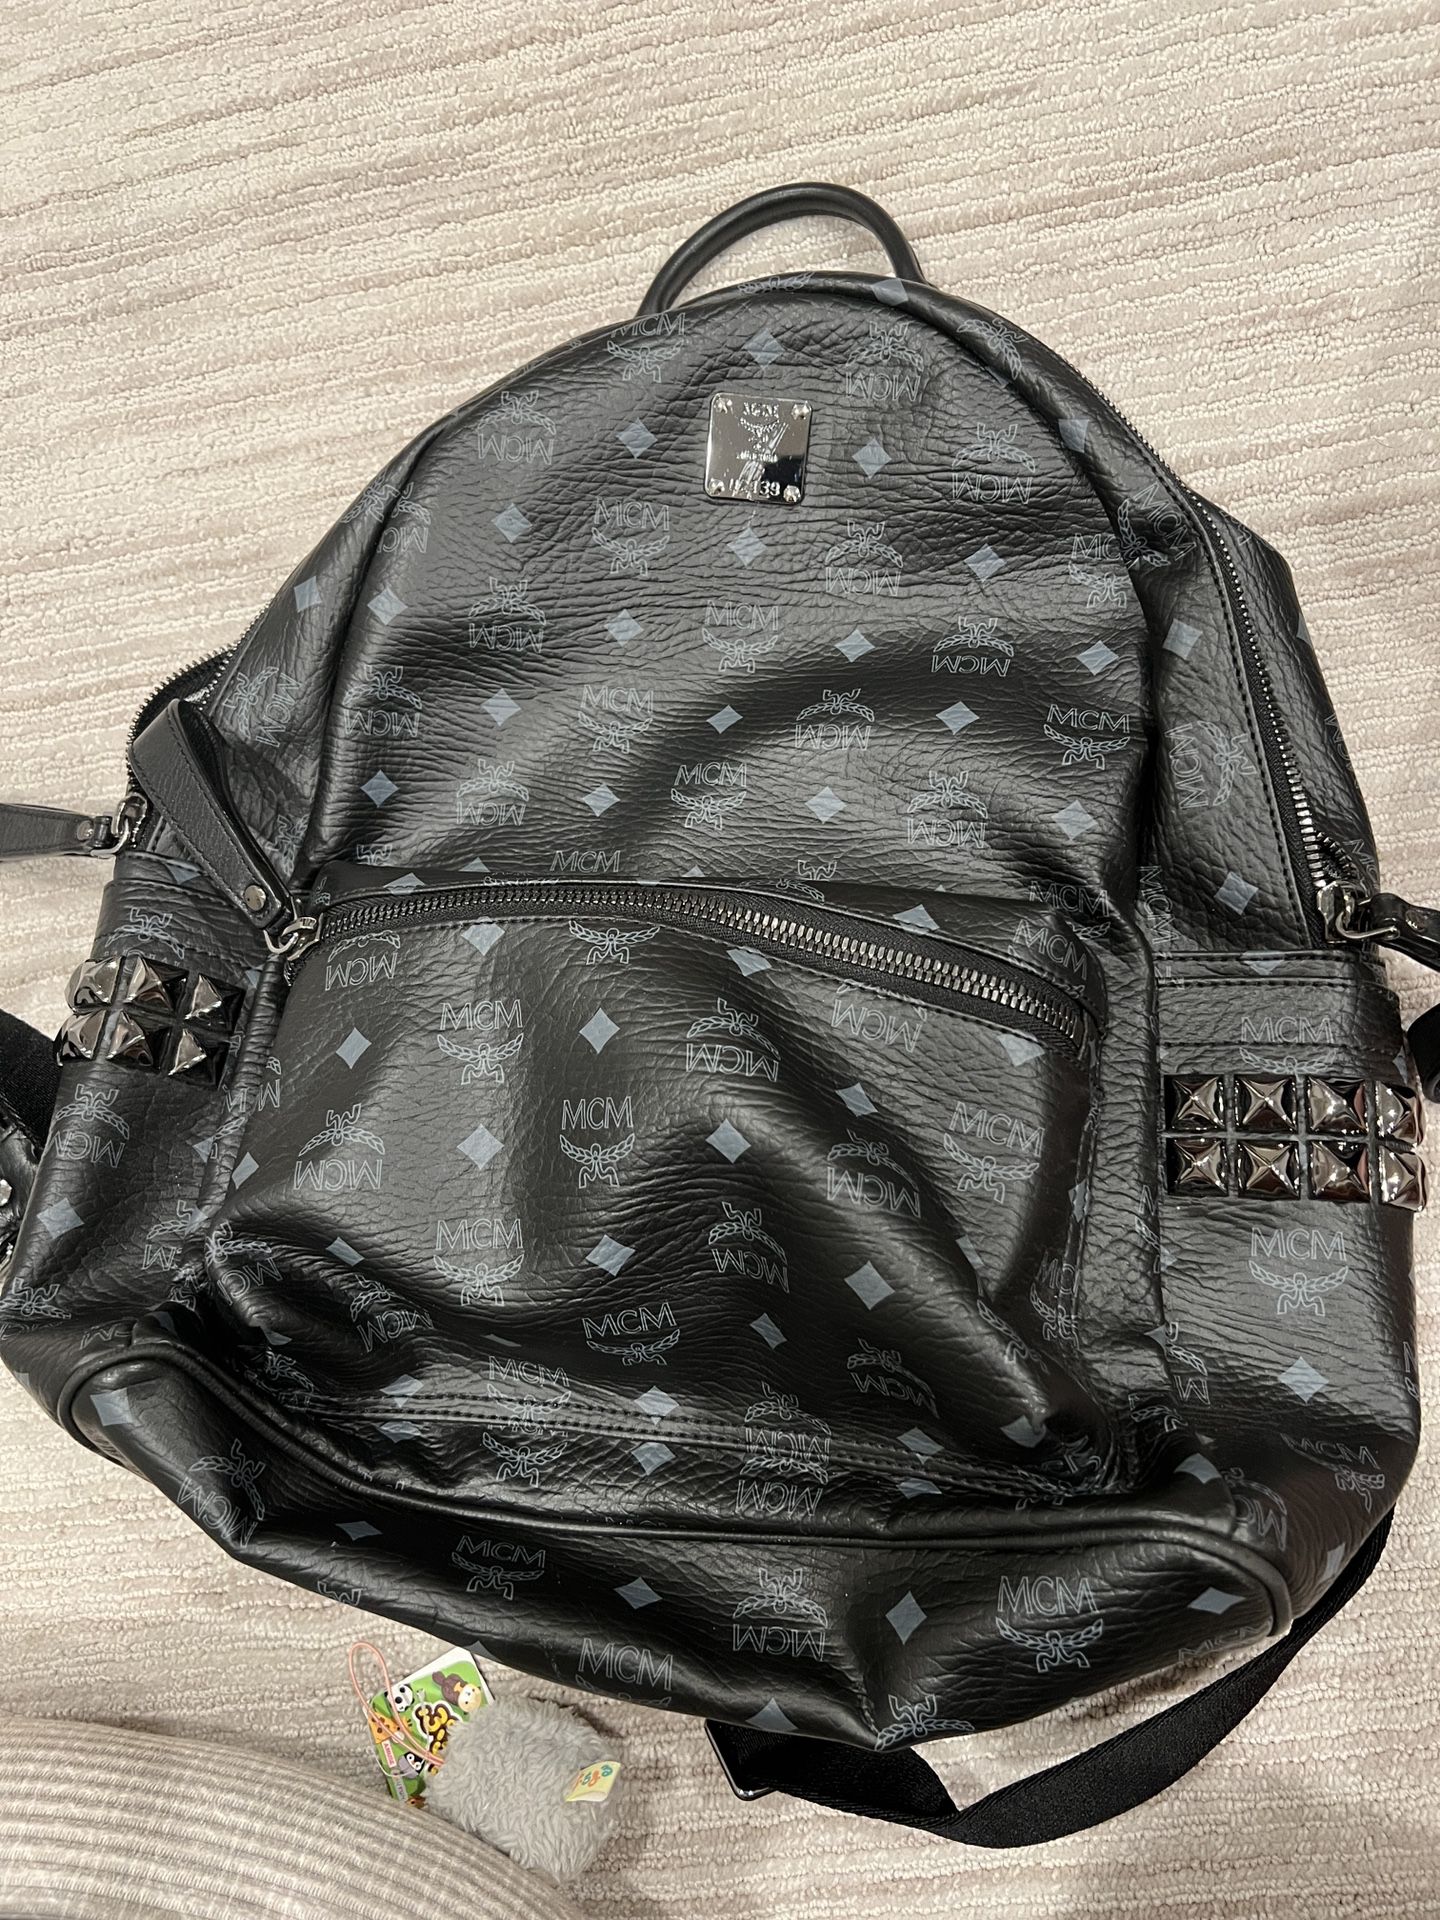 MCM Backpack for Sale in Fort Lauderdale, FL - OfferUp